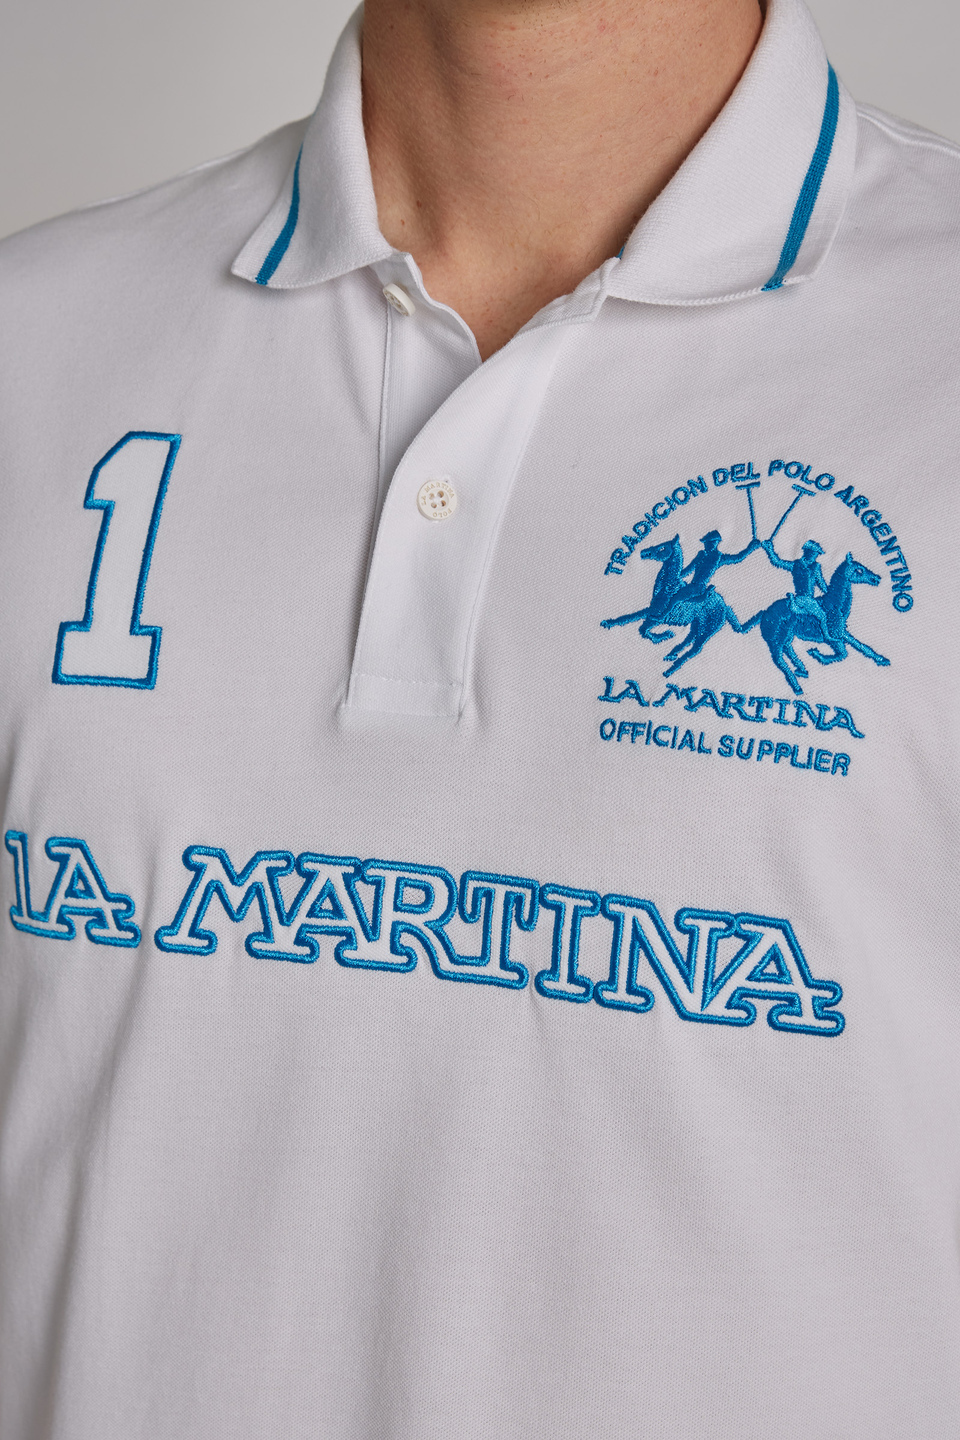 Polo de hombre de manga corta de algodón elástico, corte regular - La Martina - Official Online Shop